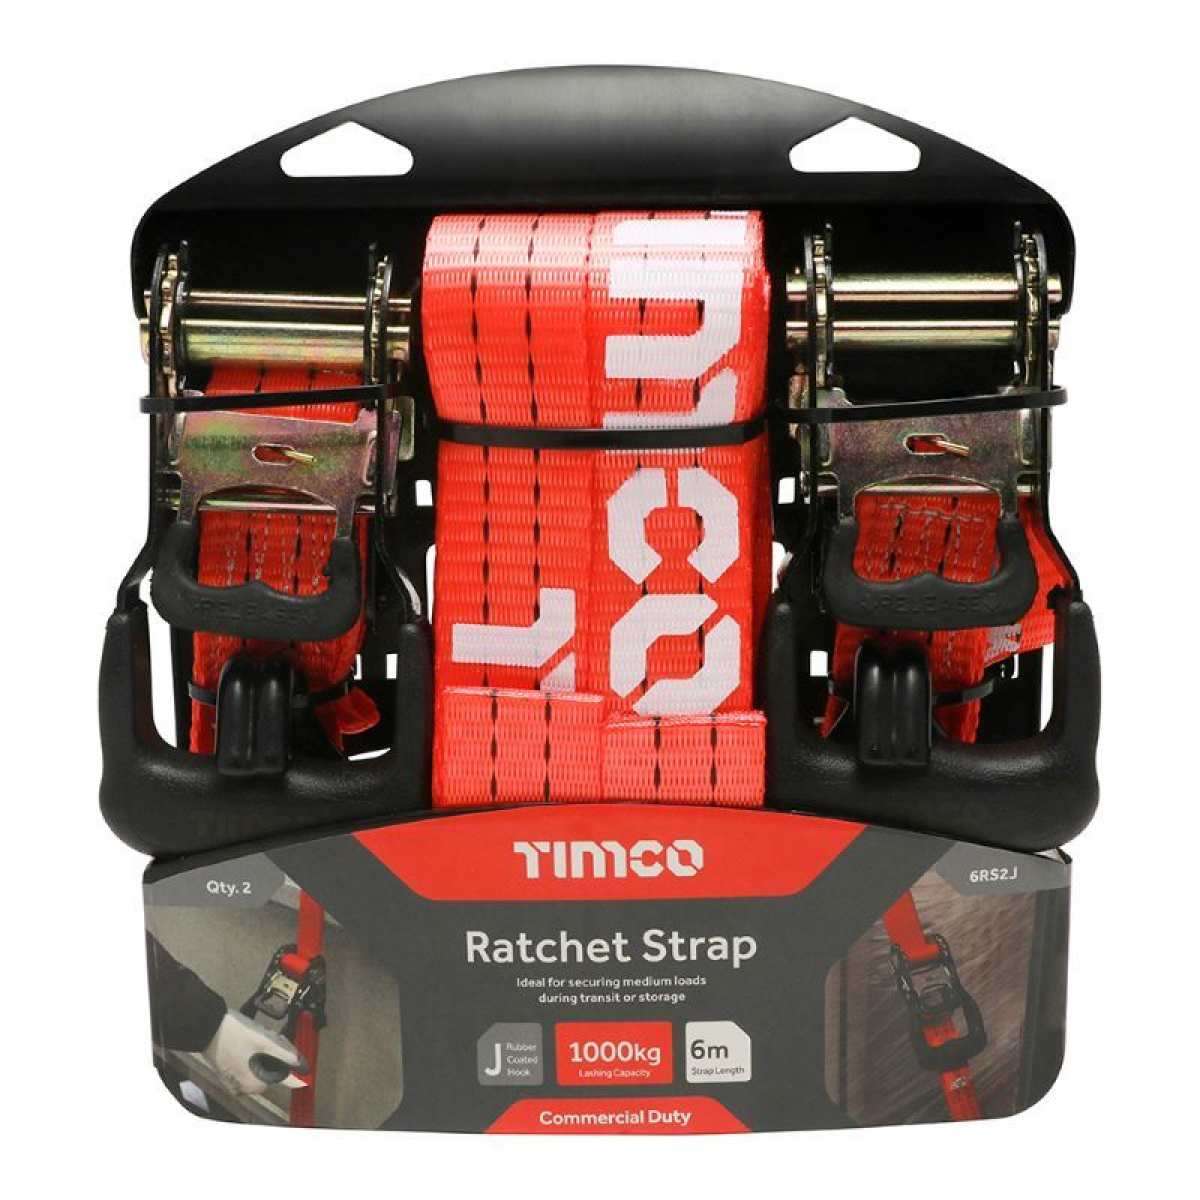 Ratchet Strap